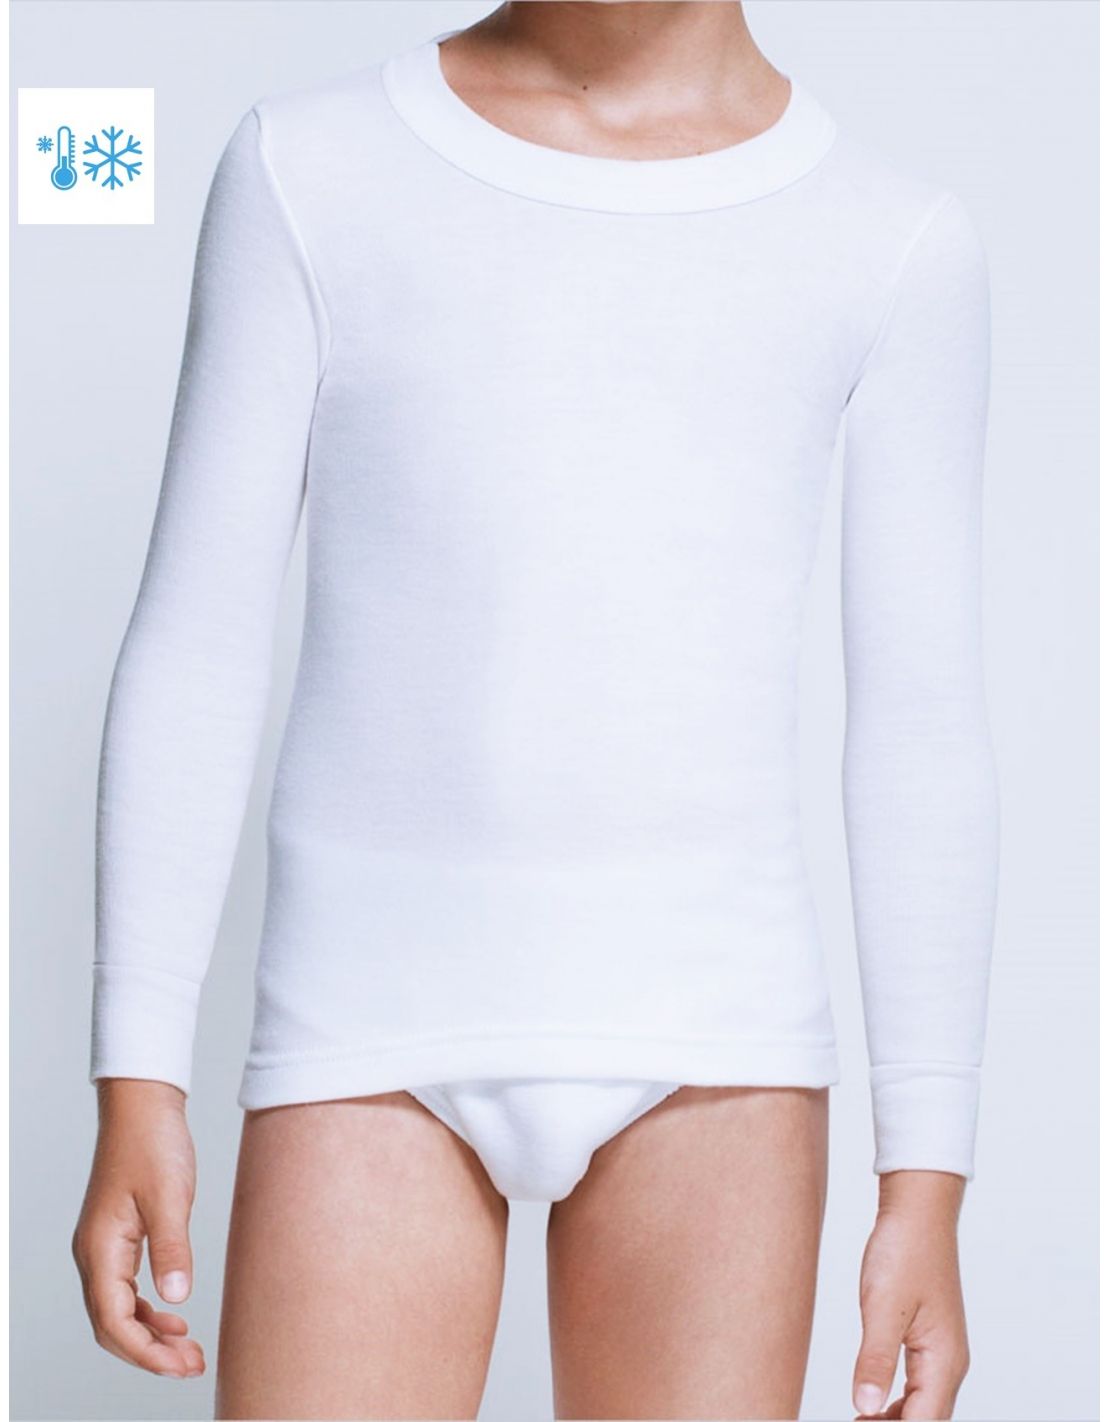 Comprar Camiseta térmica de hombre Manga corta Blanco? Calidad y ahorro